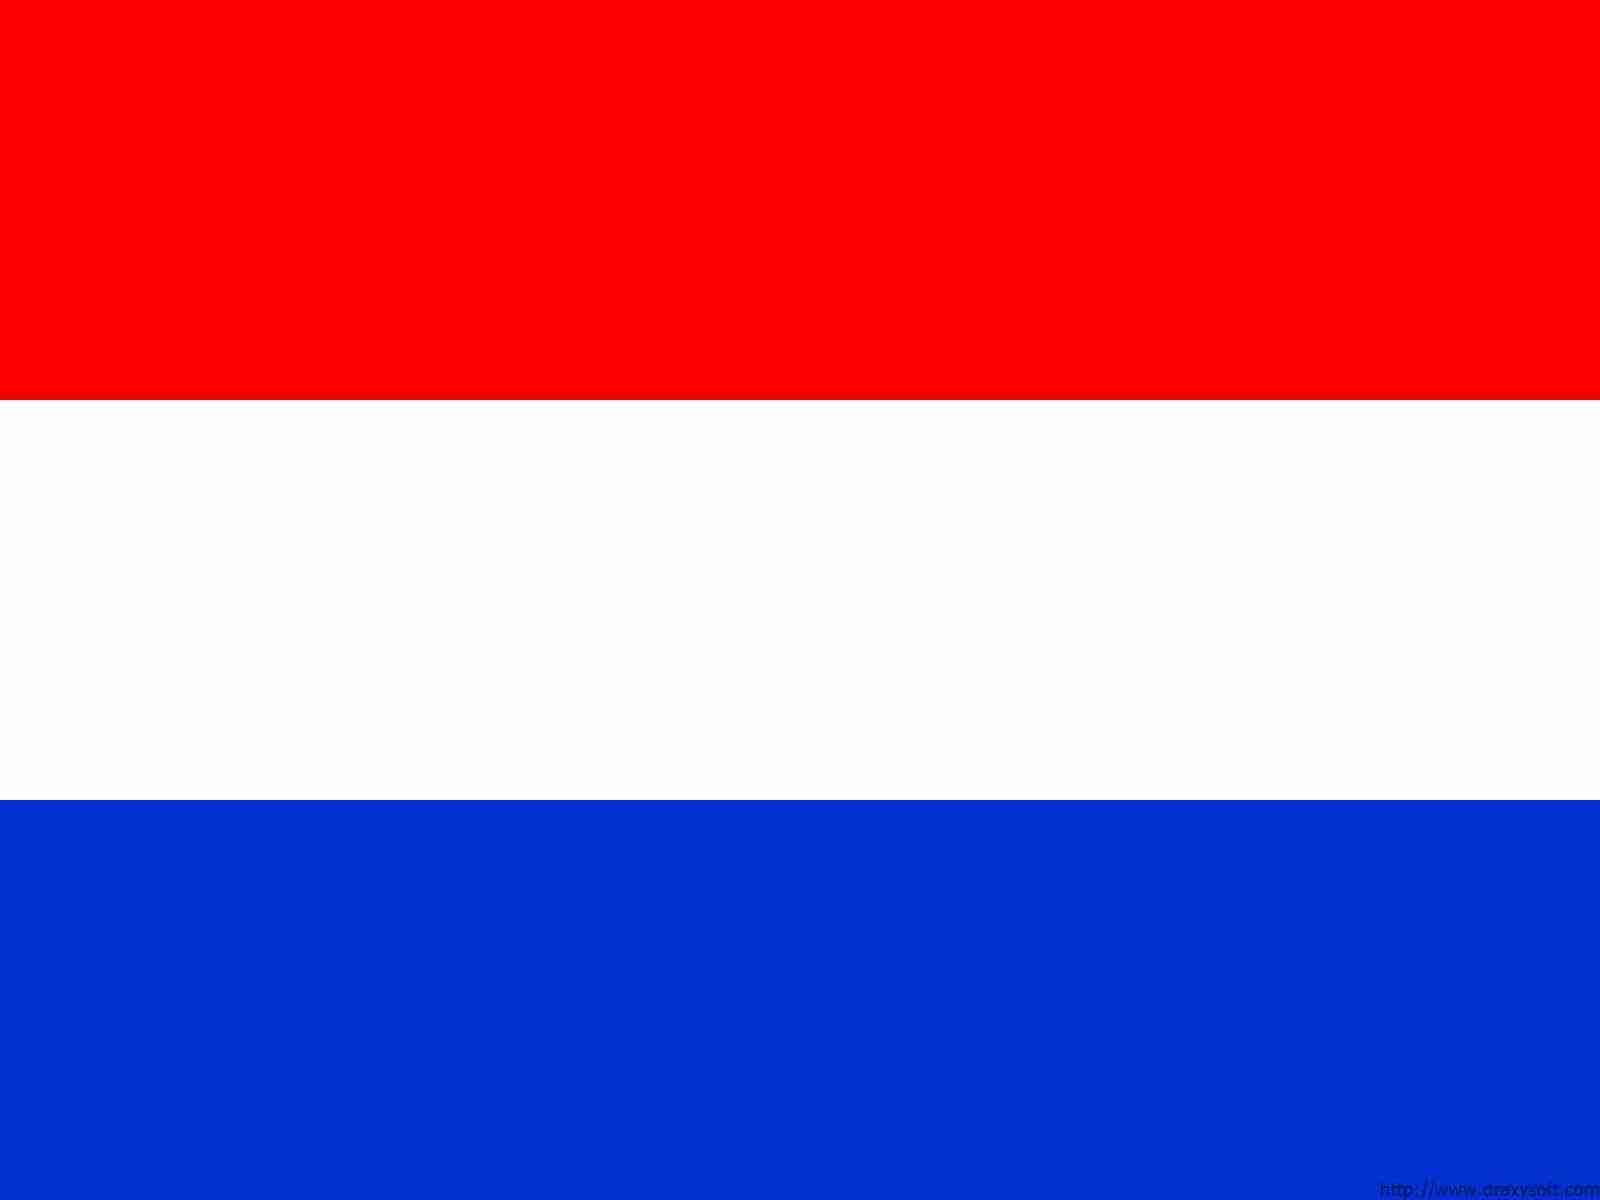 Netherland Colors 28 Images Graafix Wallpapers Flag Of Netherlands